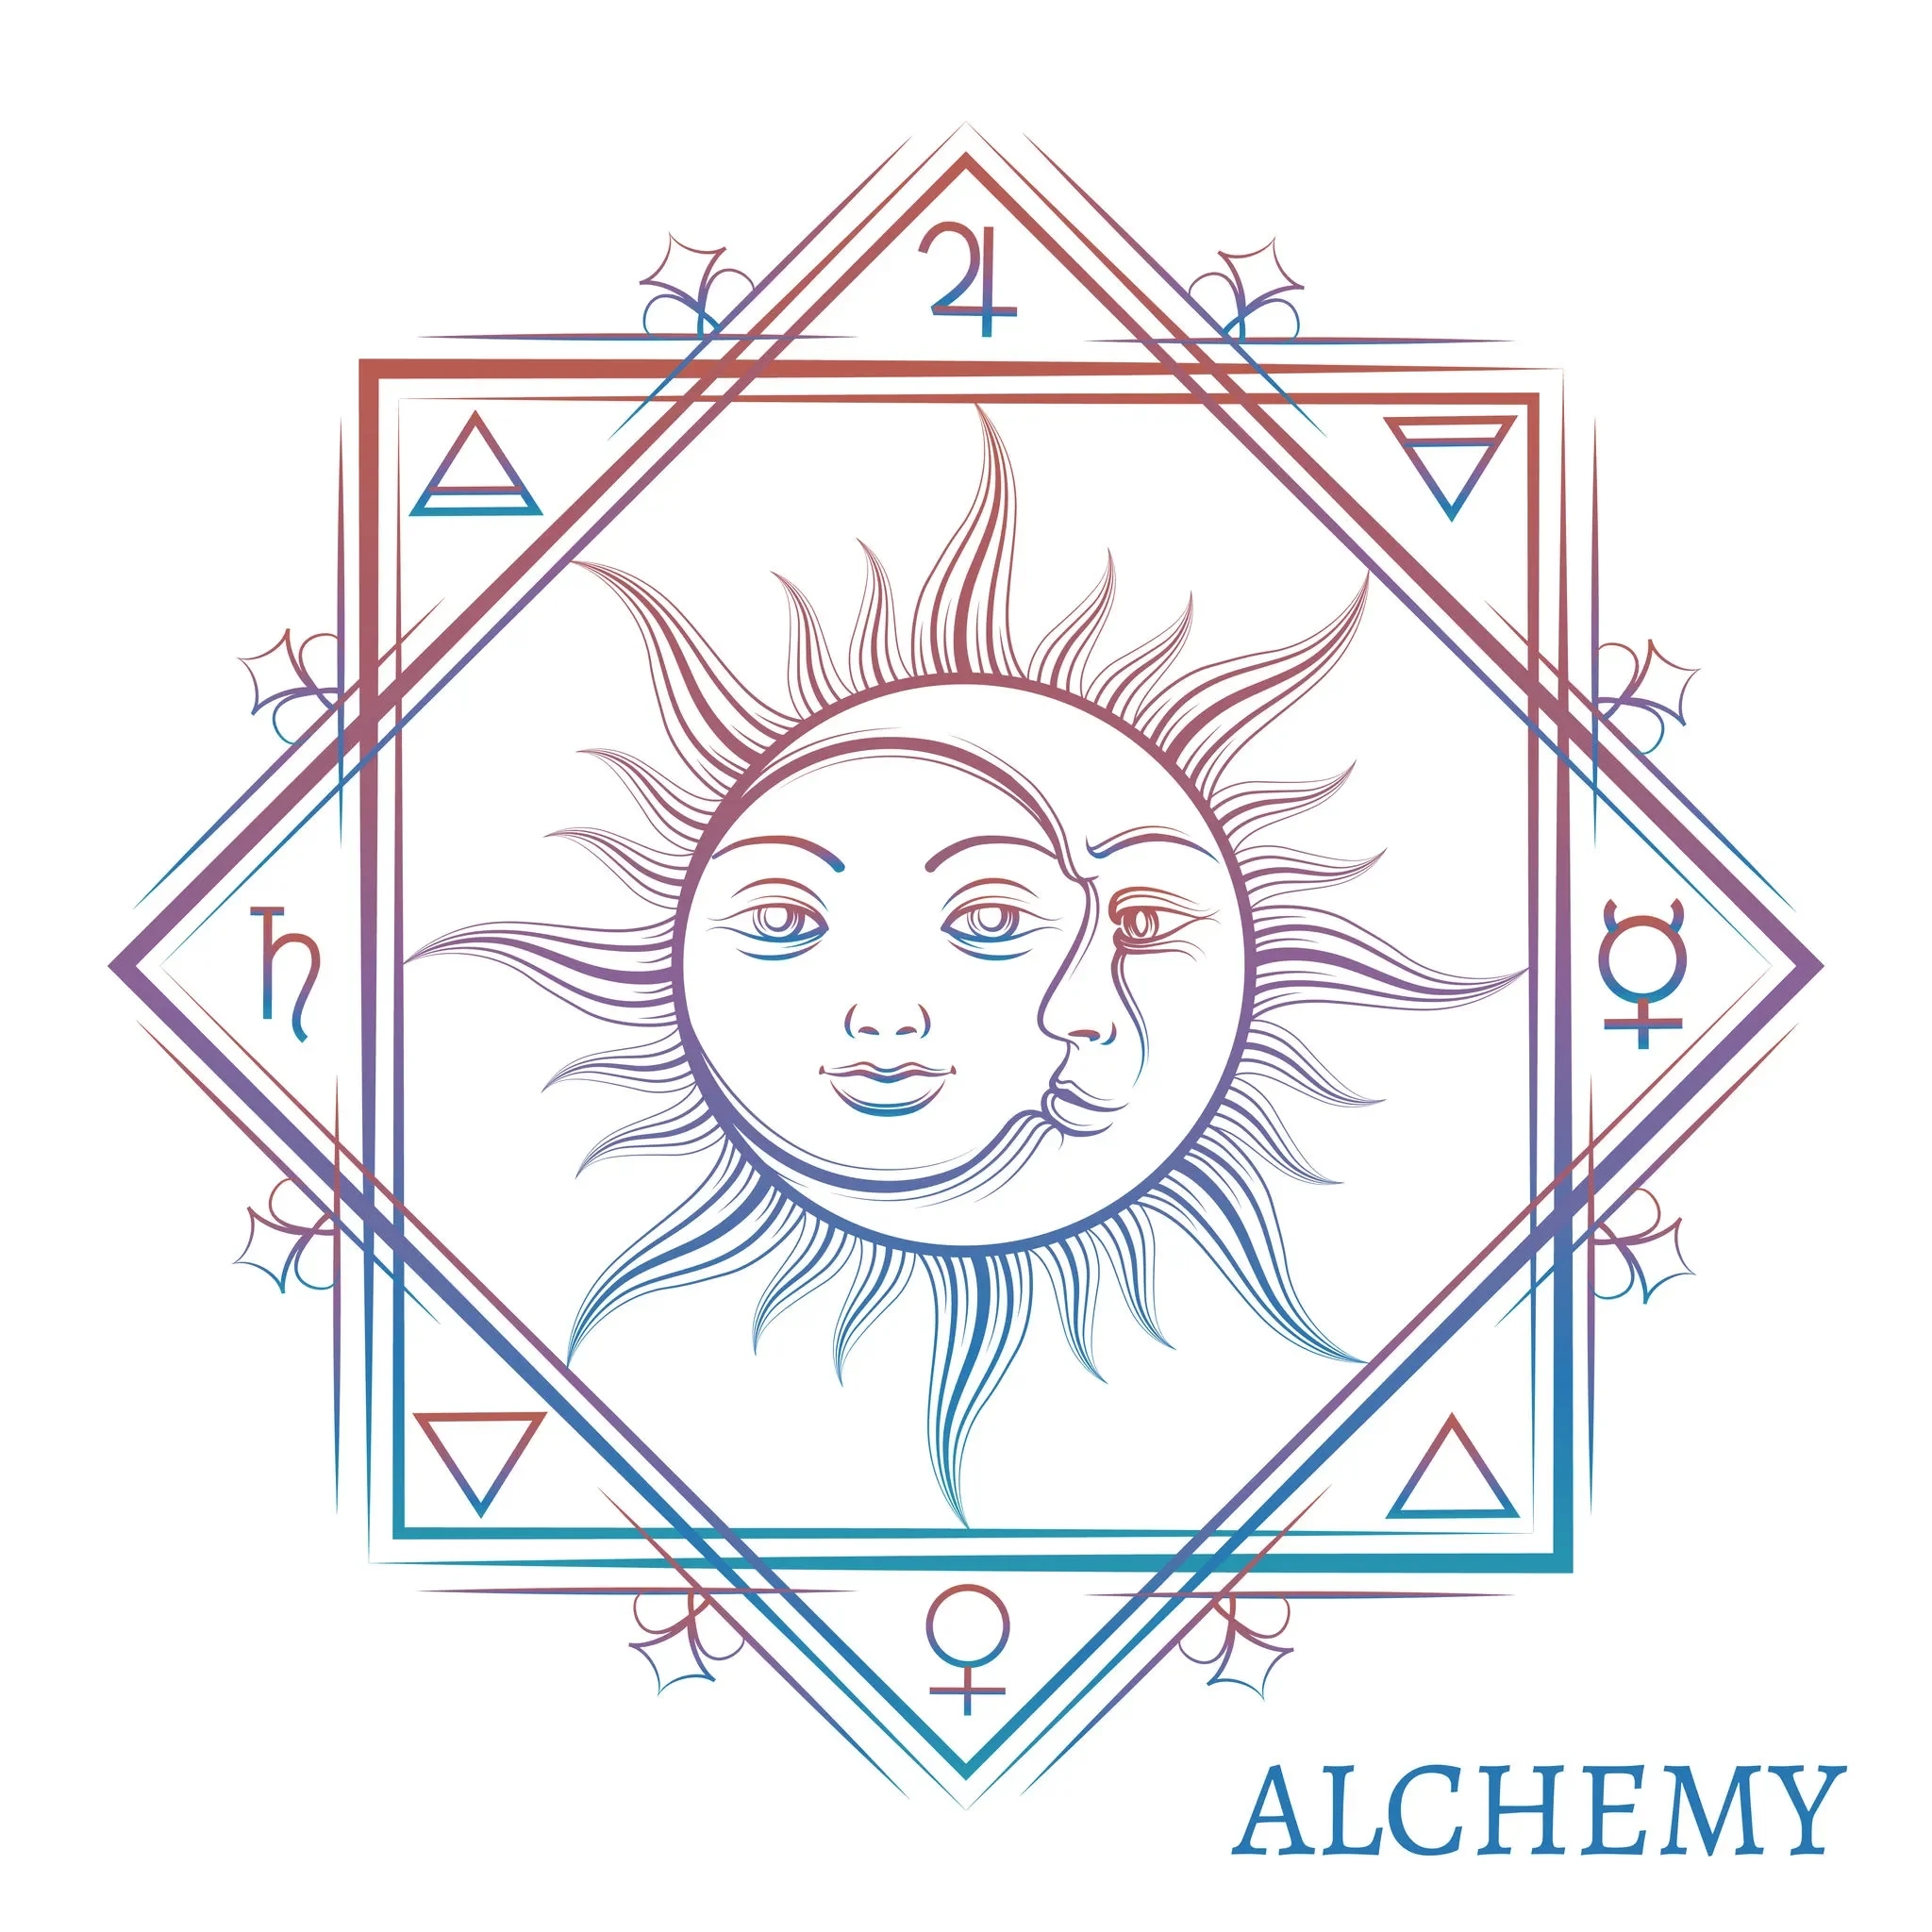 Alessio Puppi's Alchemy